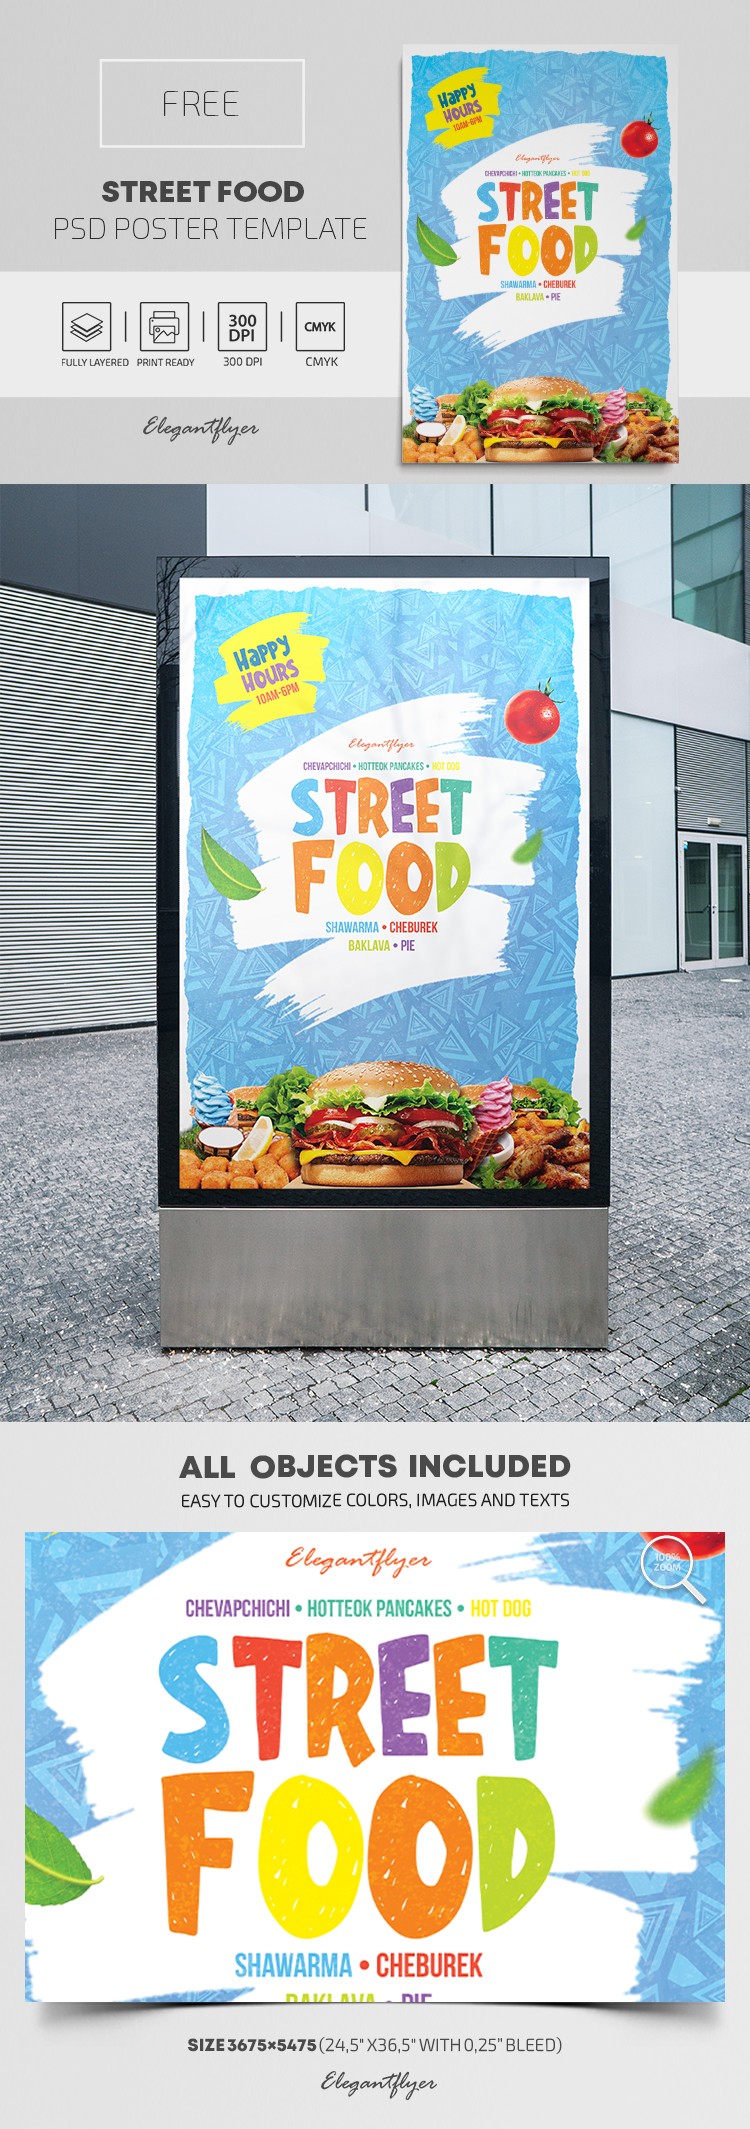 Straßenküche Plakat by ElegantFlyer